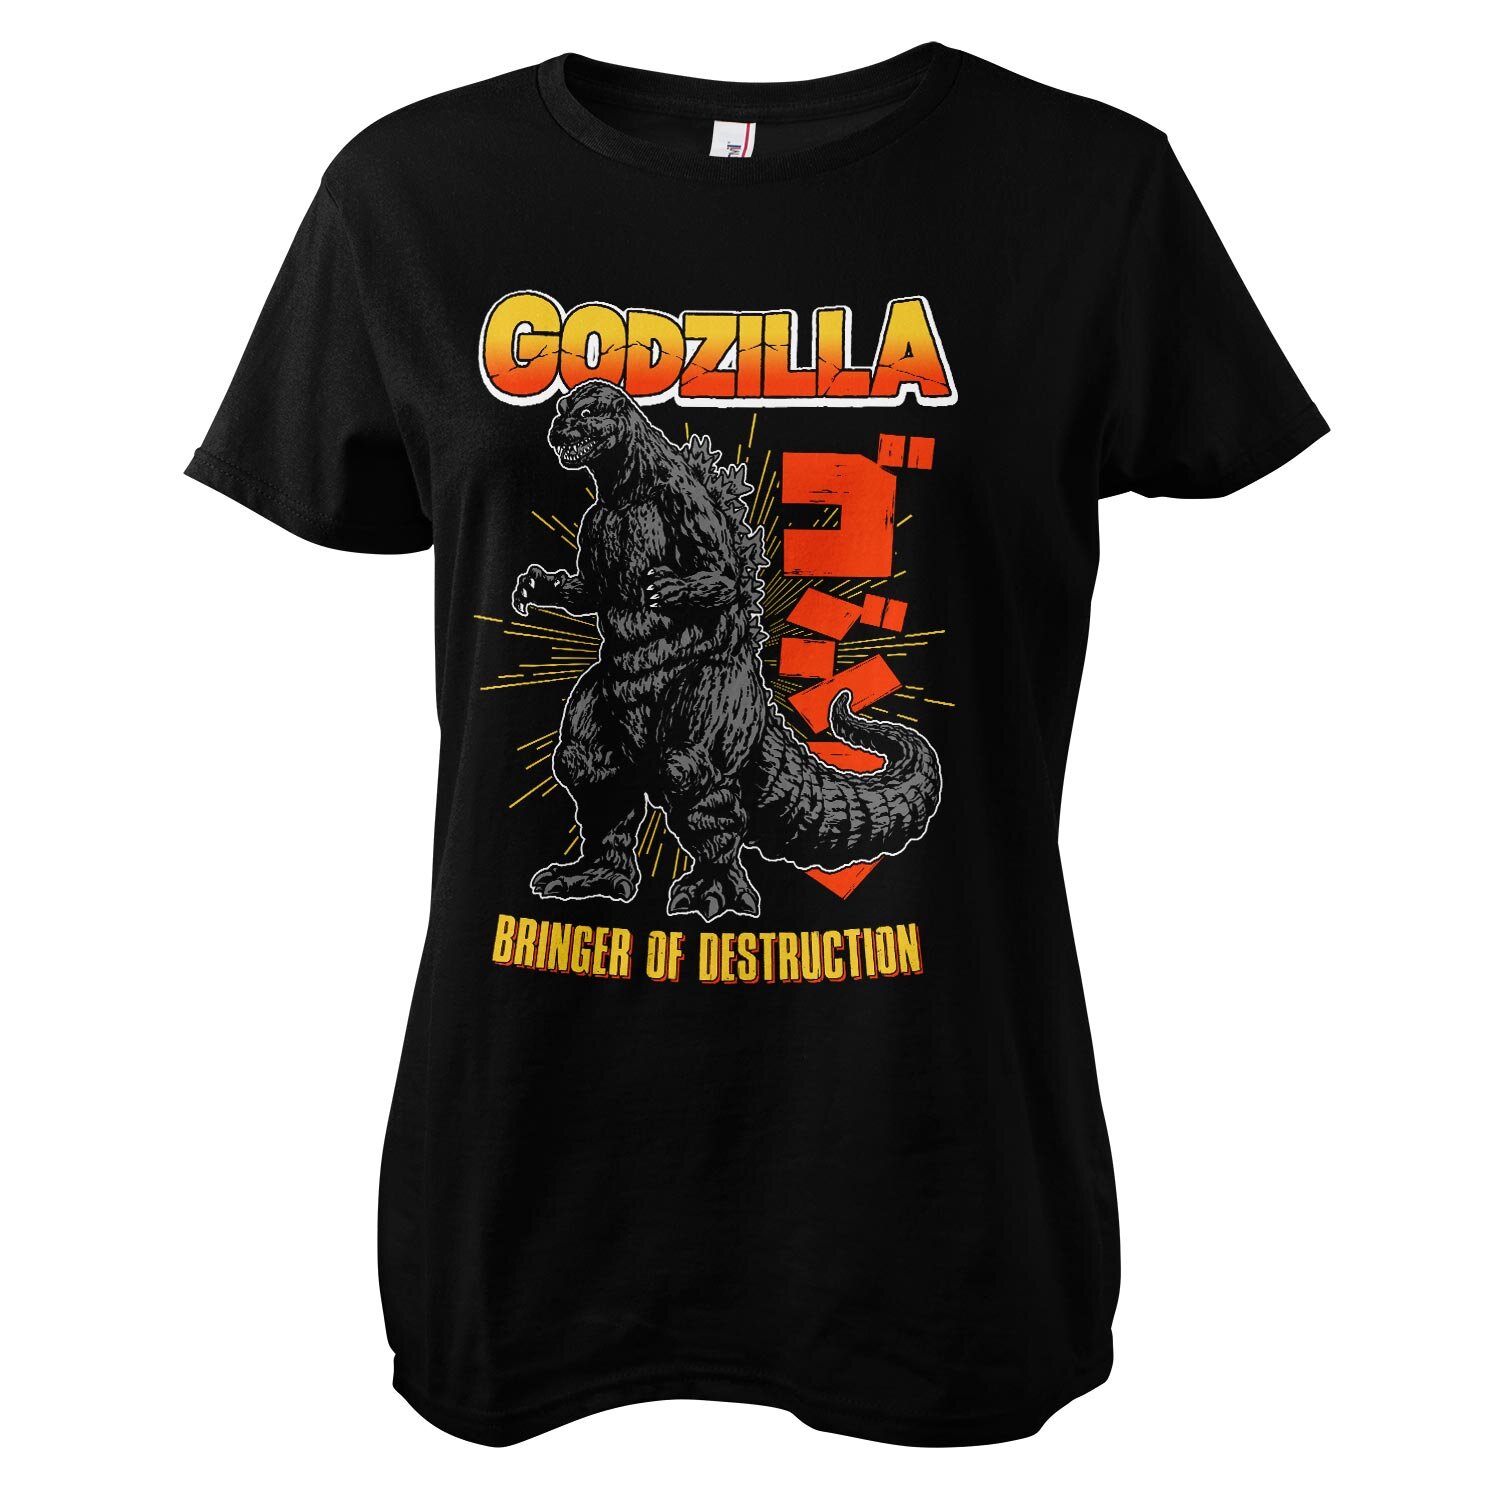 Godzilla - Bringer Of Destruction Girly Tee